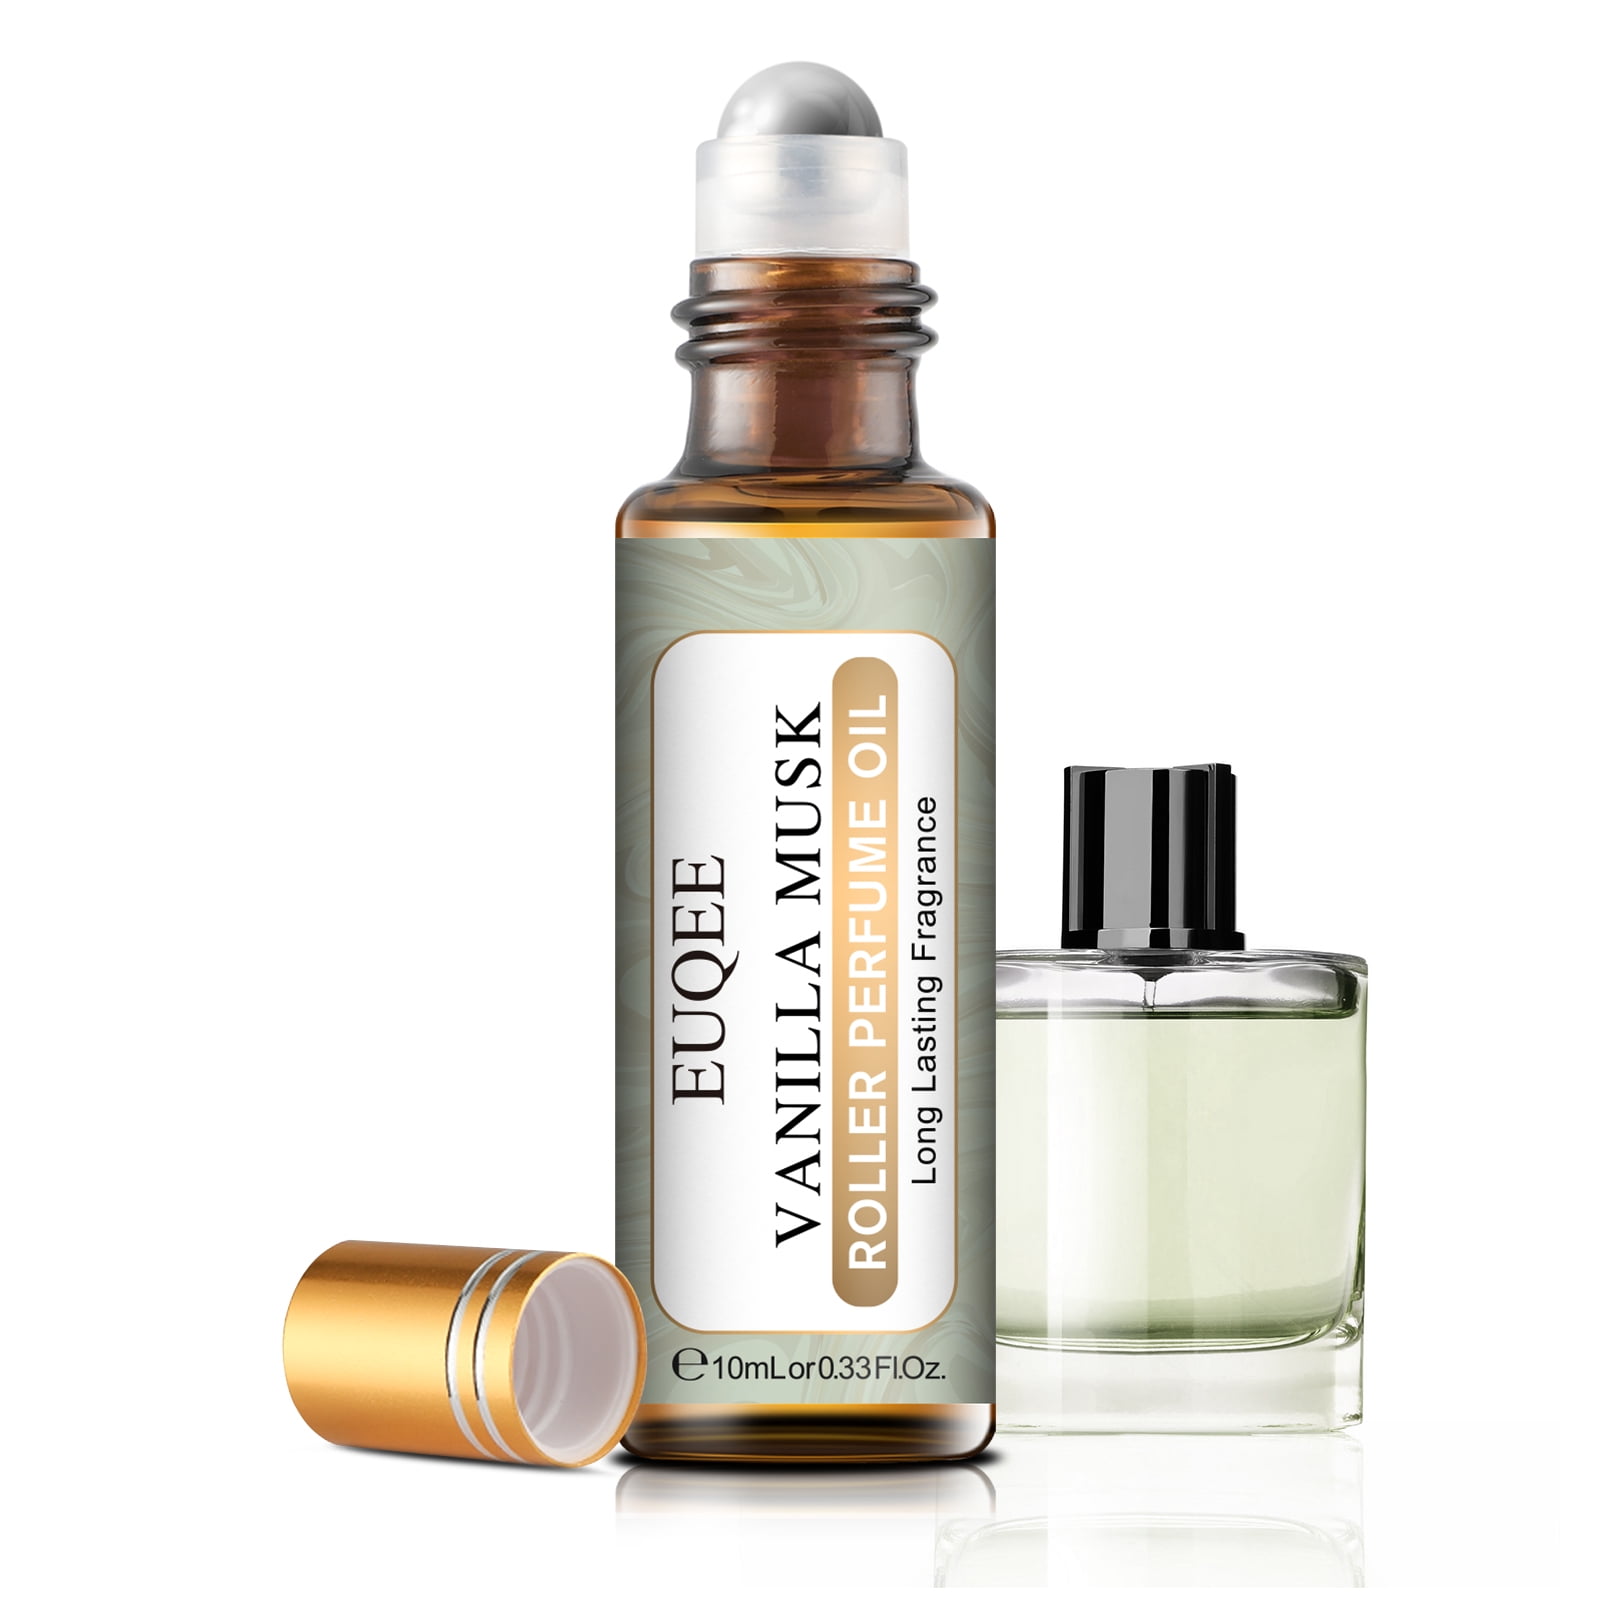 EUQEE Vanilla Musk Roll-on Perfume Oil, Therapeutic Grade, Pure and Natural  for Aromatherapy, Diffuser, Soap Making, Spa Massage, Skin Care  (10ml/0.33fl.oz) 